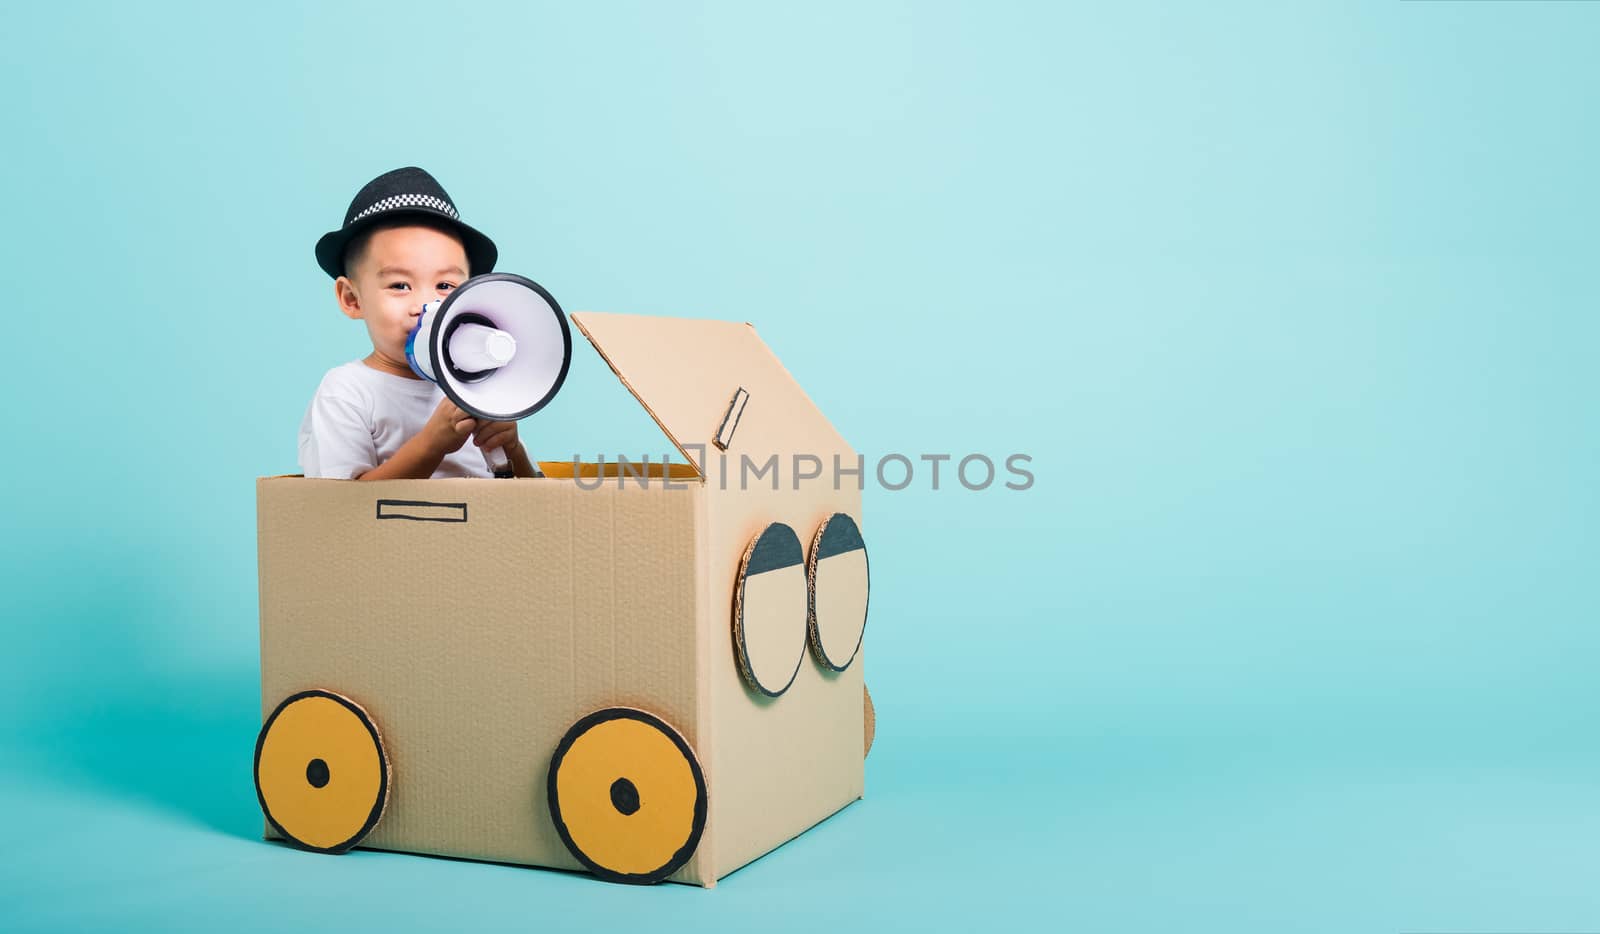 children boy smile in driving play car creative by a cardboard b by Sorapop